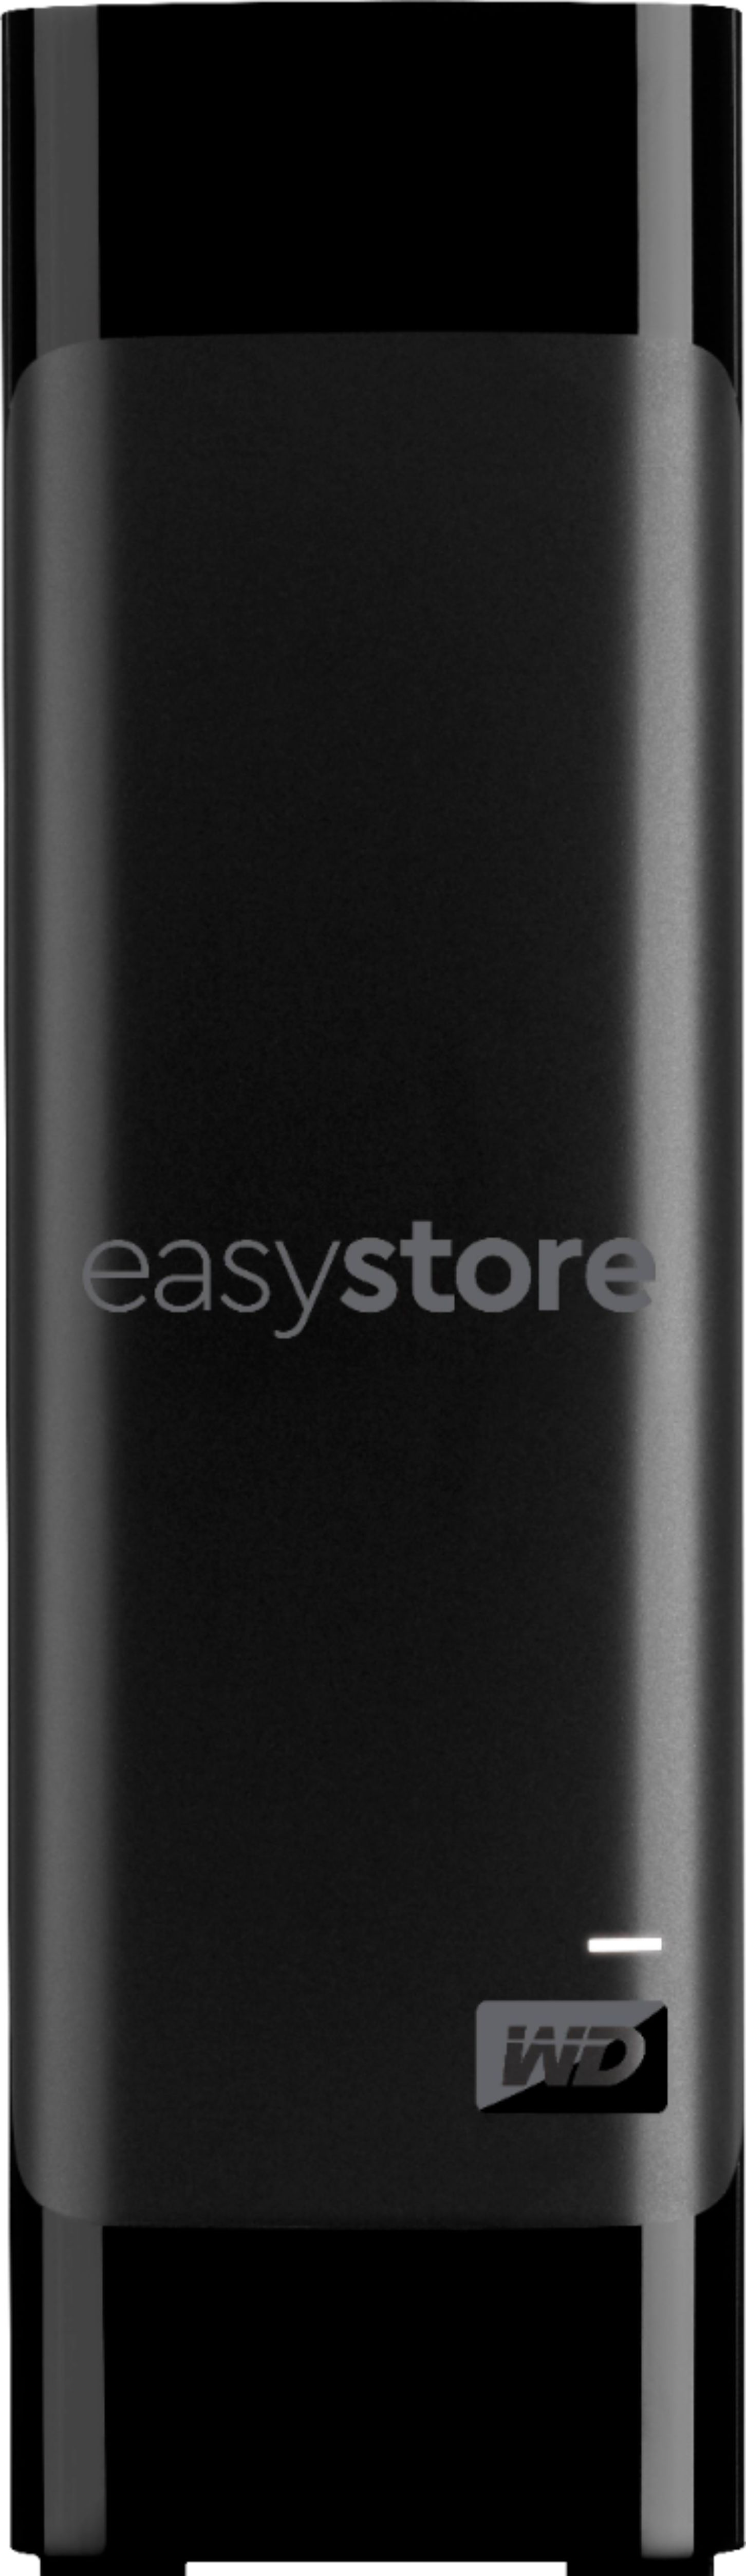 WD easystore USB 3.0 Hard Black WDBAMA0080HBK-NESN - Best Buy